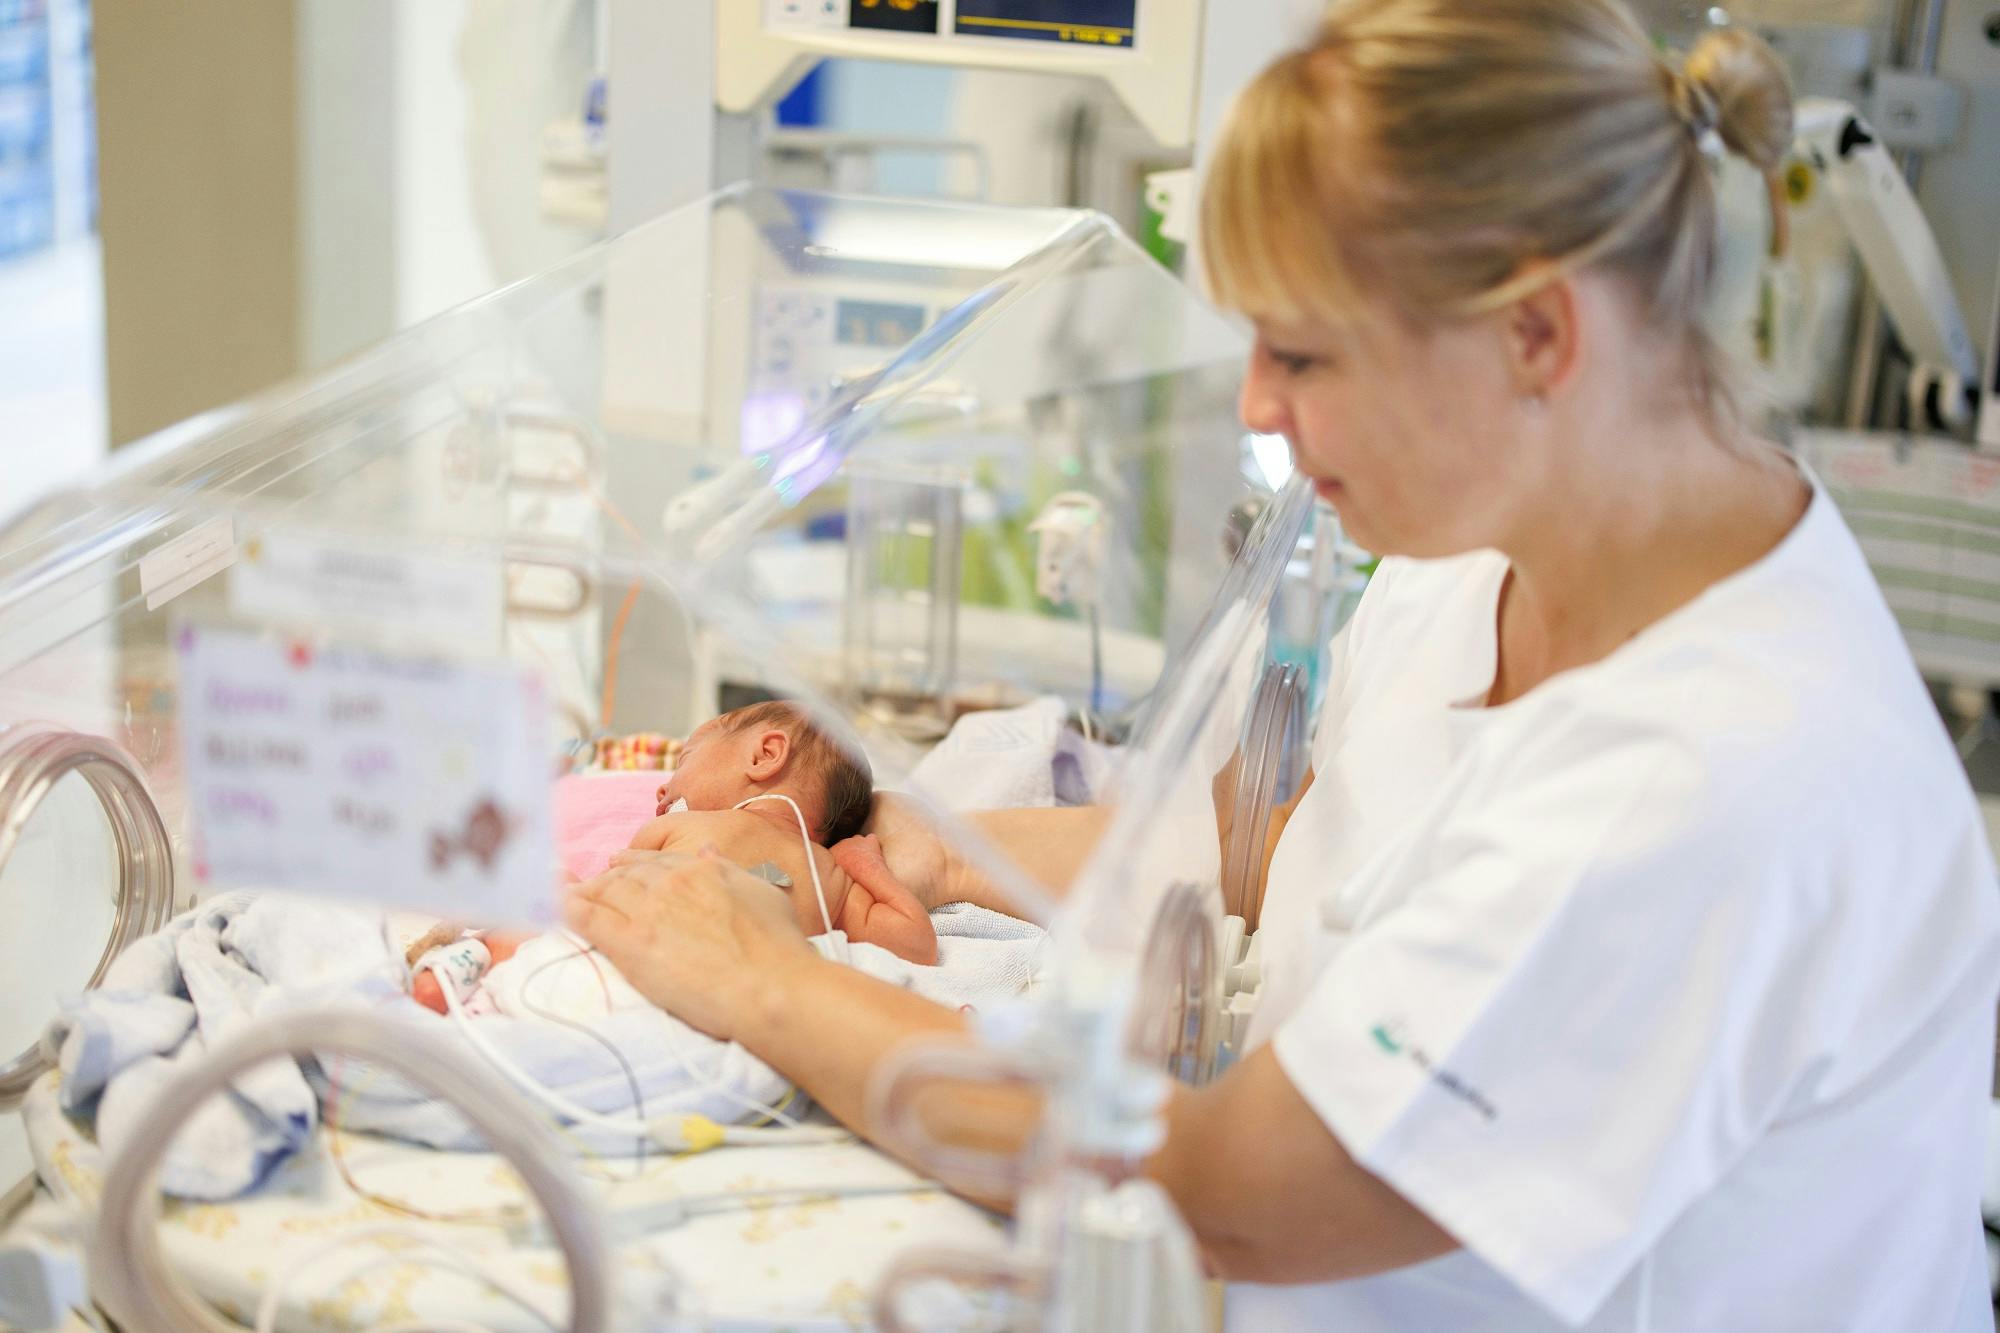 Nurse looks after a newborn baby in an incubator.